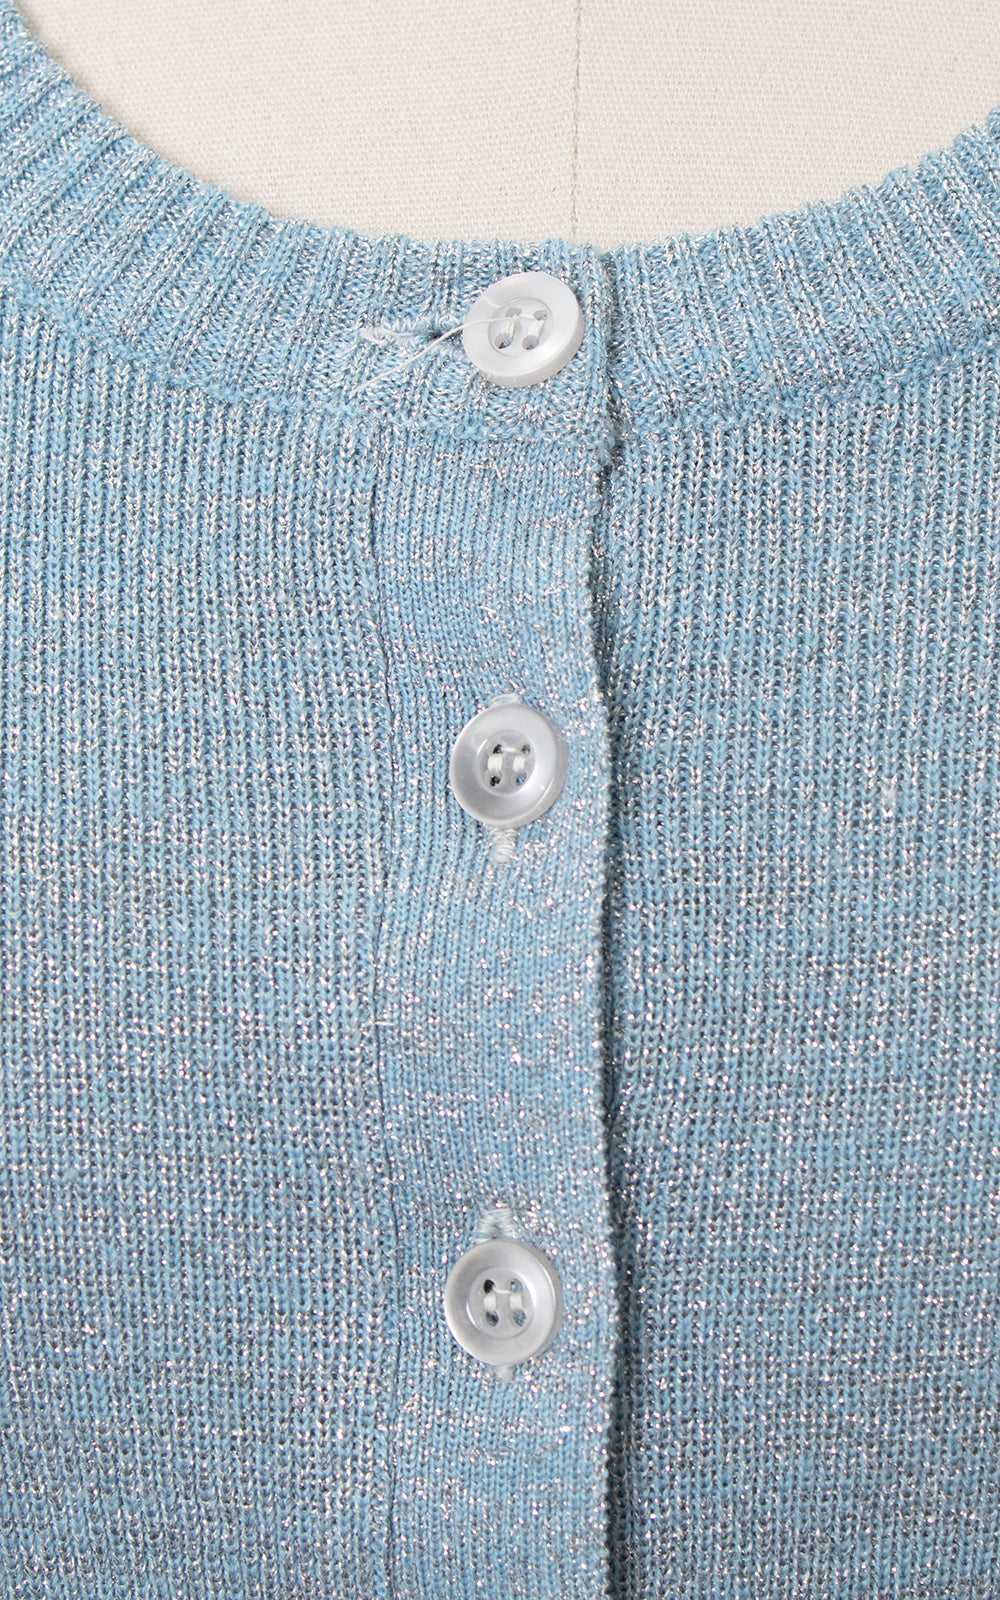 1960s Metallic Blue Knit Sweater Top | small/medi… - image 6